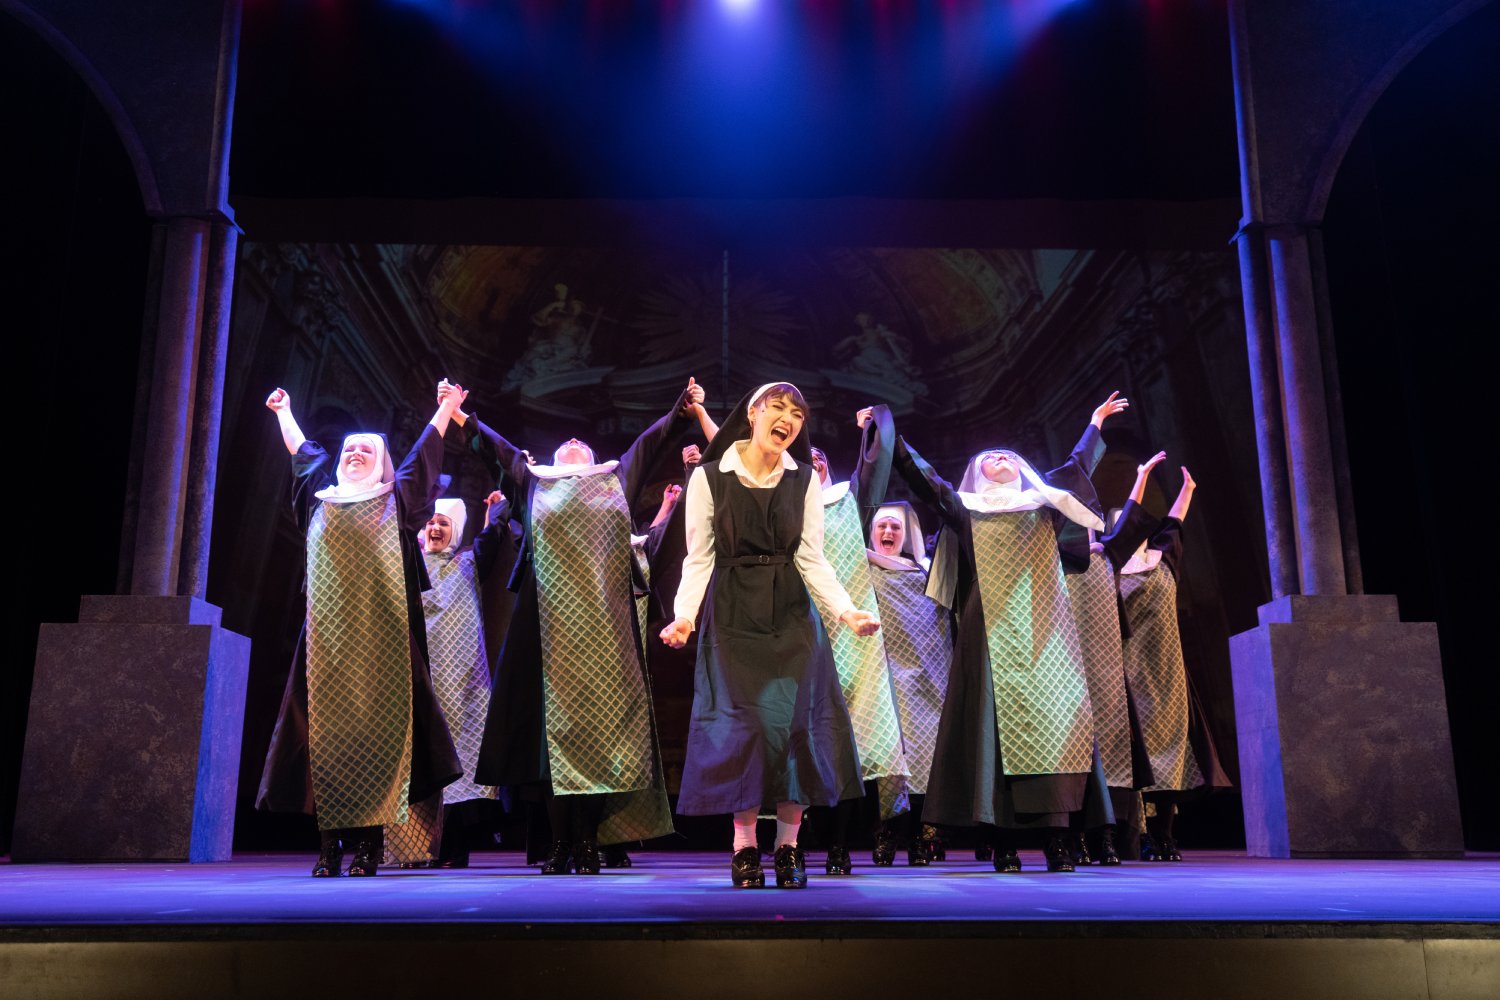 Ensemble shot of nuns singing in Sister Act